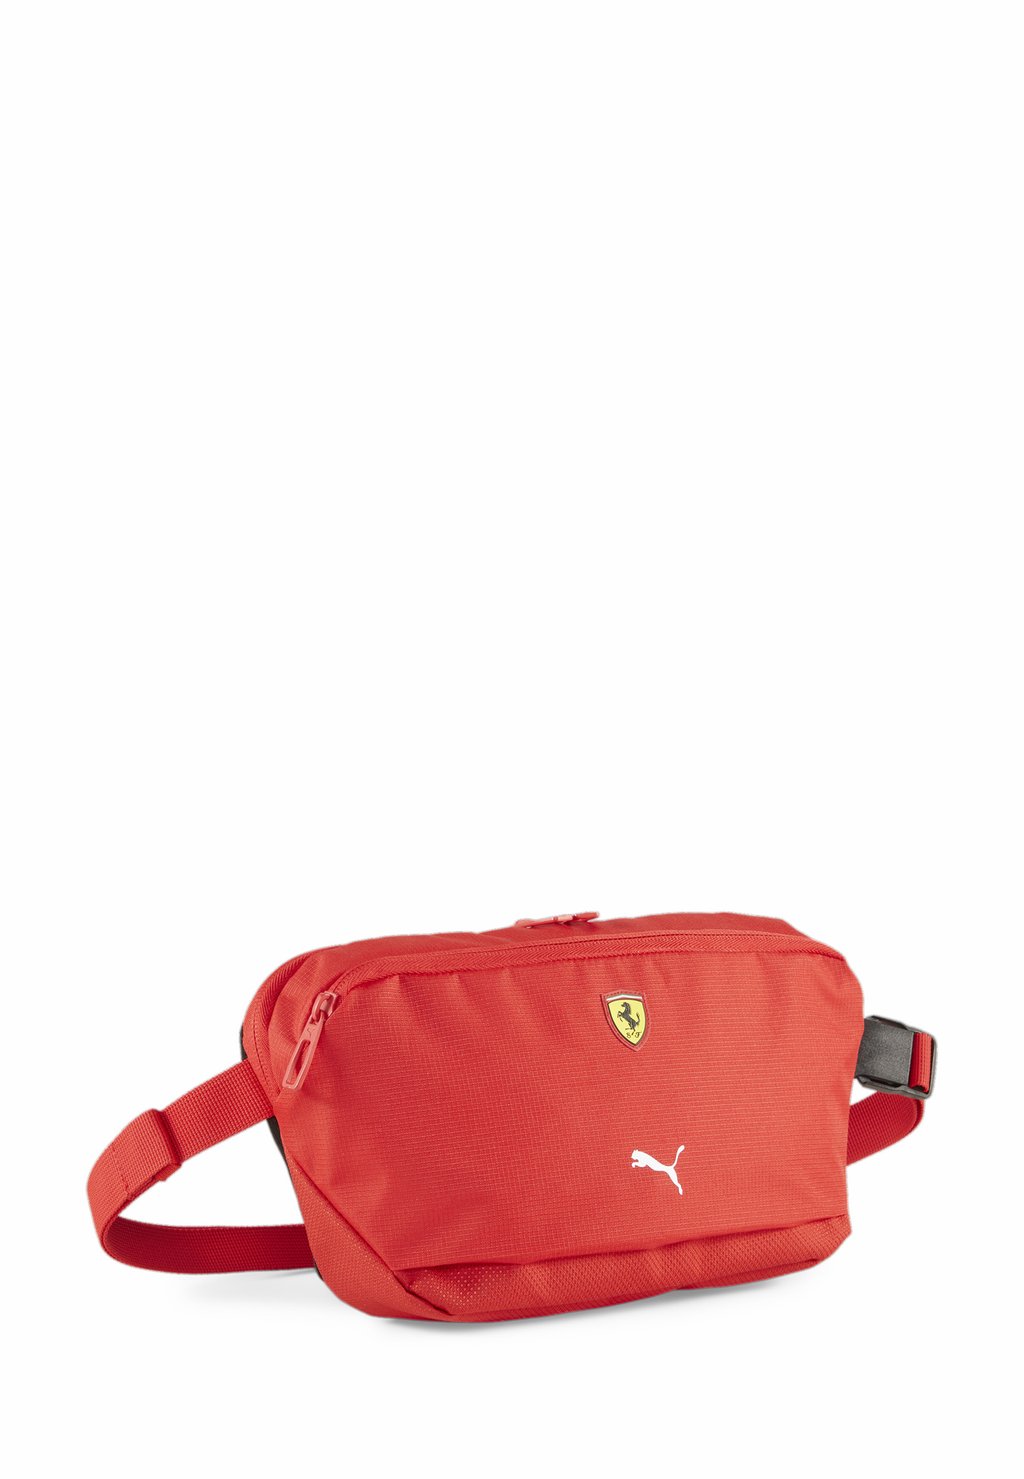 Поясная сумка Scuderia Ferrari Race Motorsport Puma, цвет rosso corsa assetto corsa